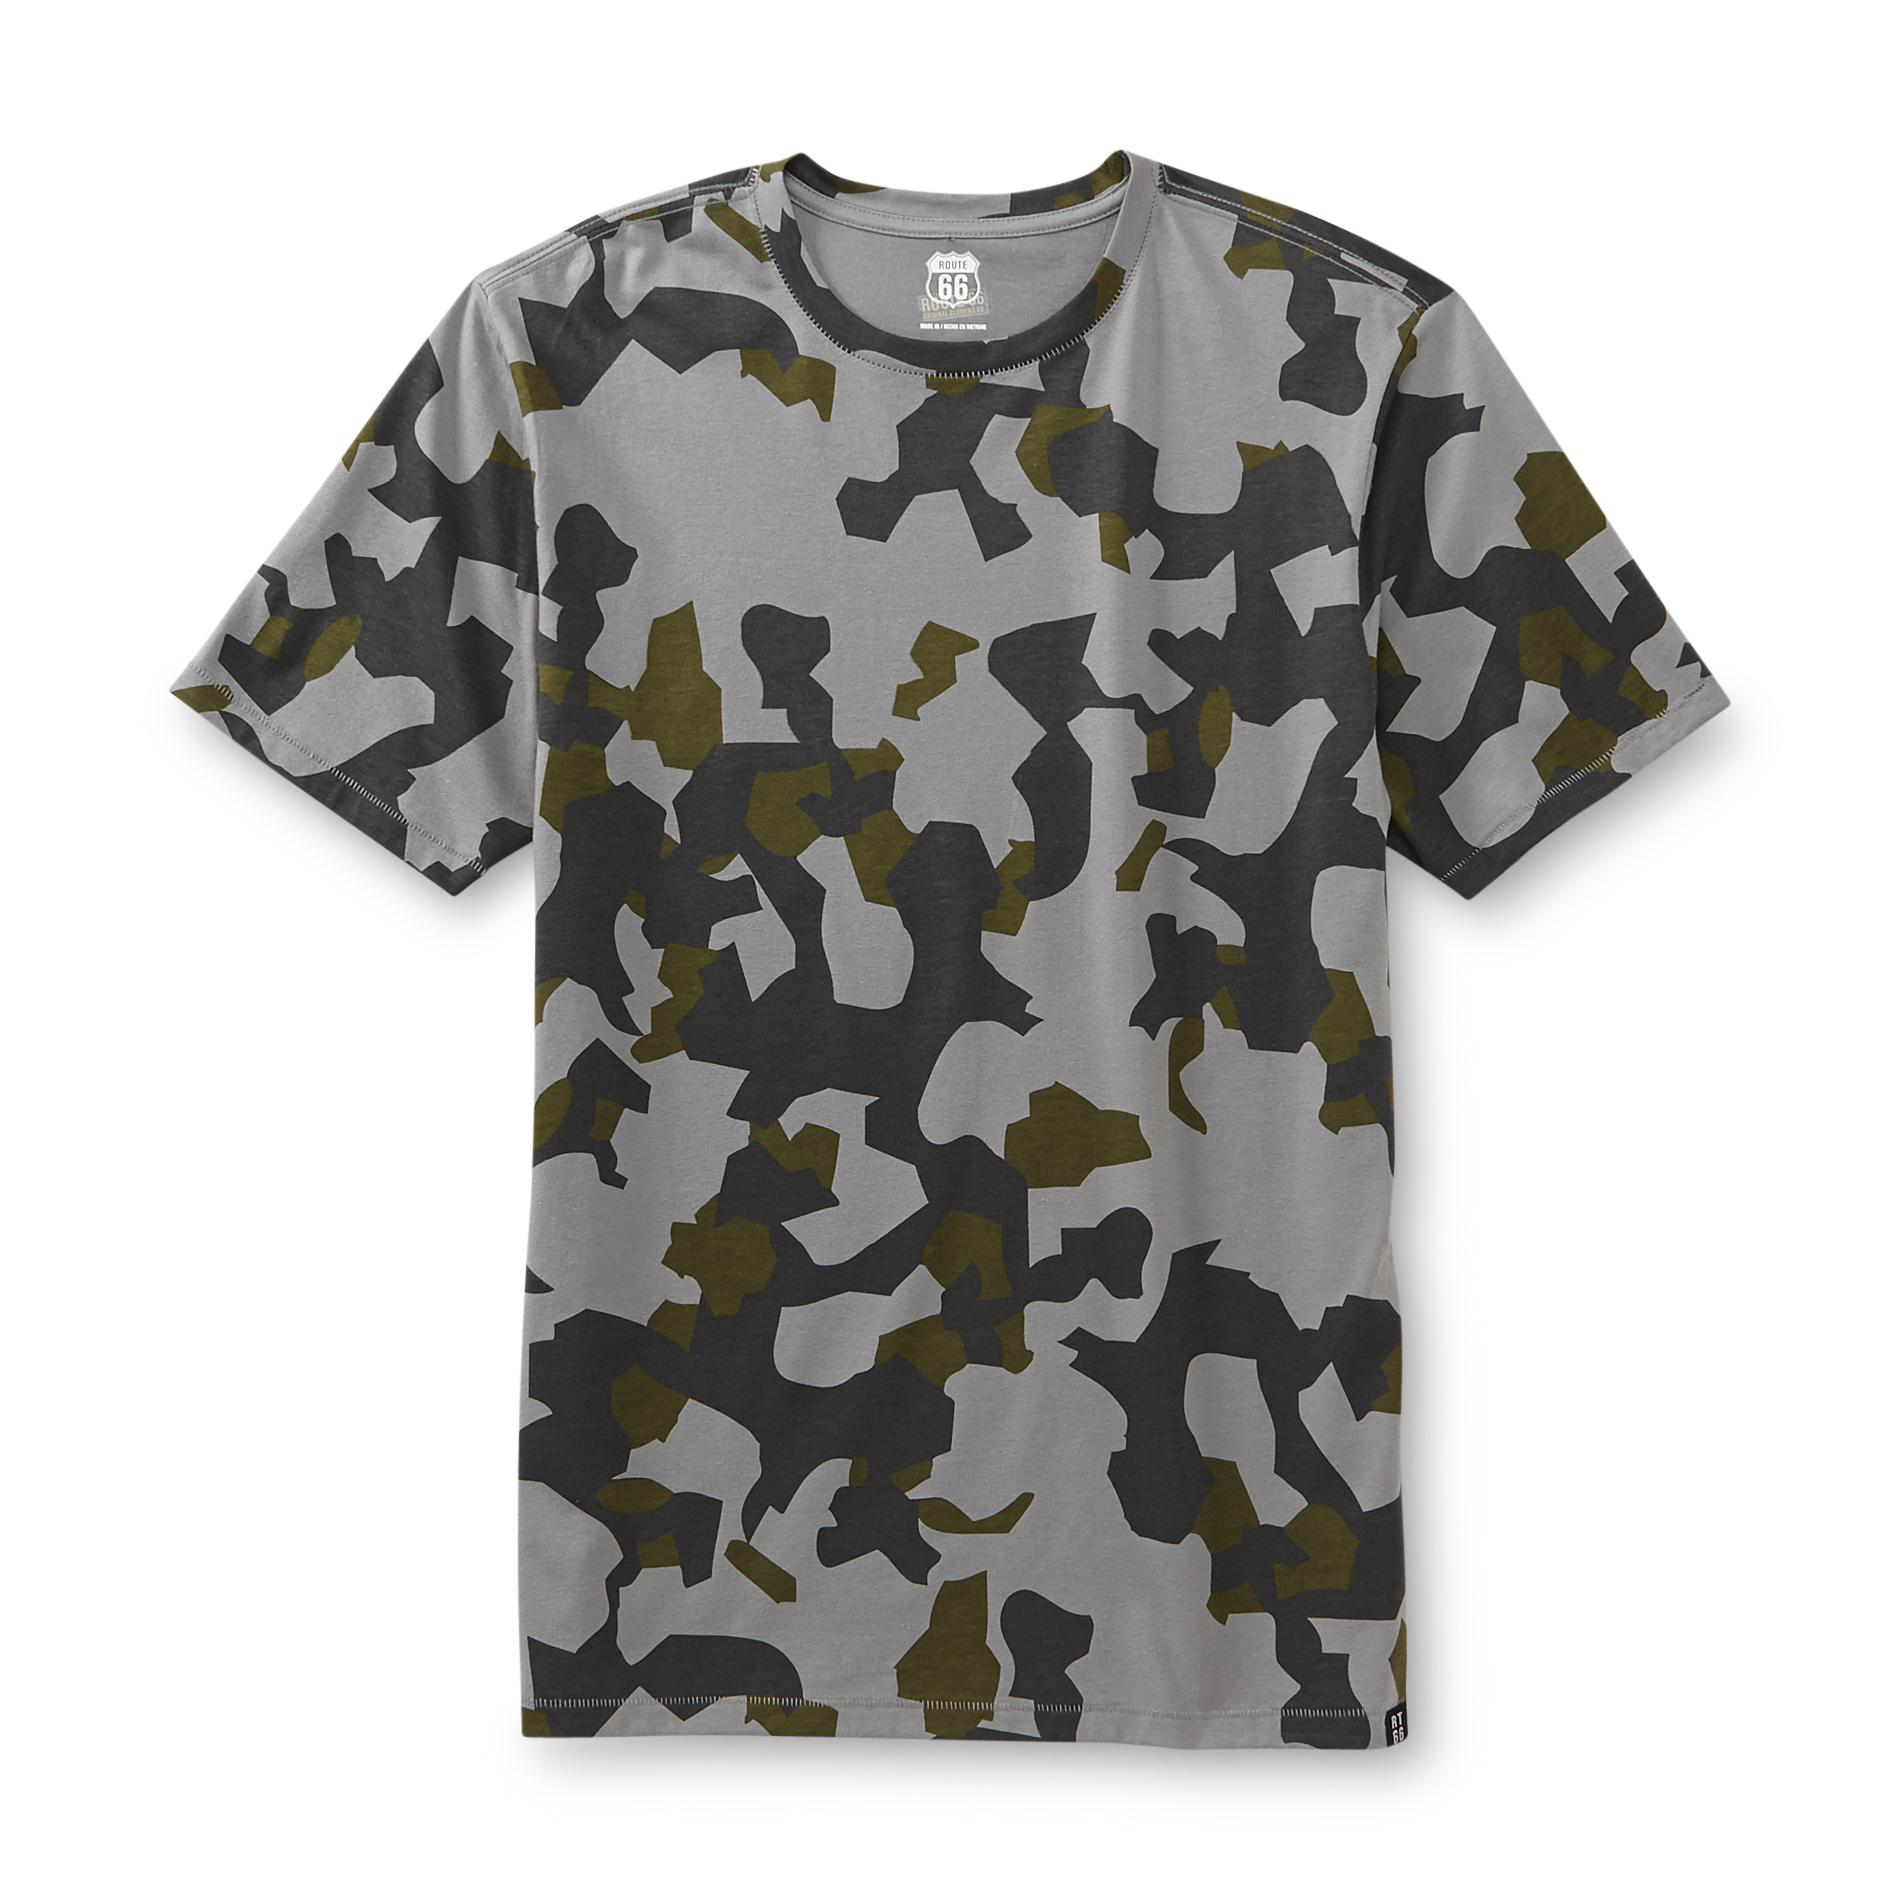 Route 66 Men's T-Shirt - Camouflage